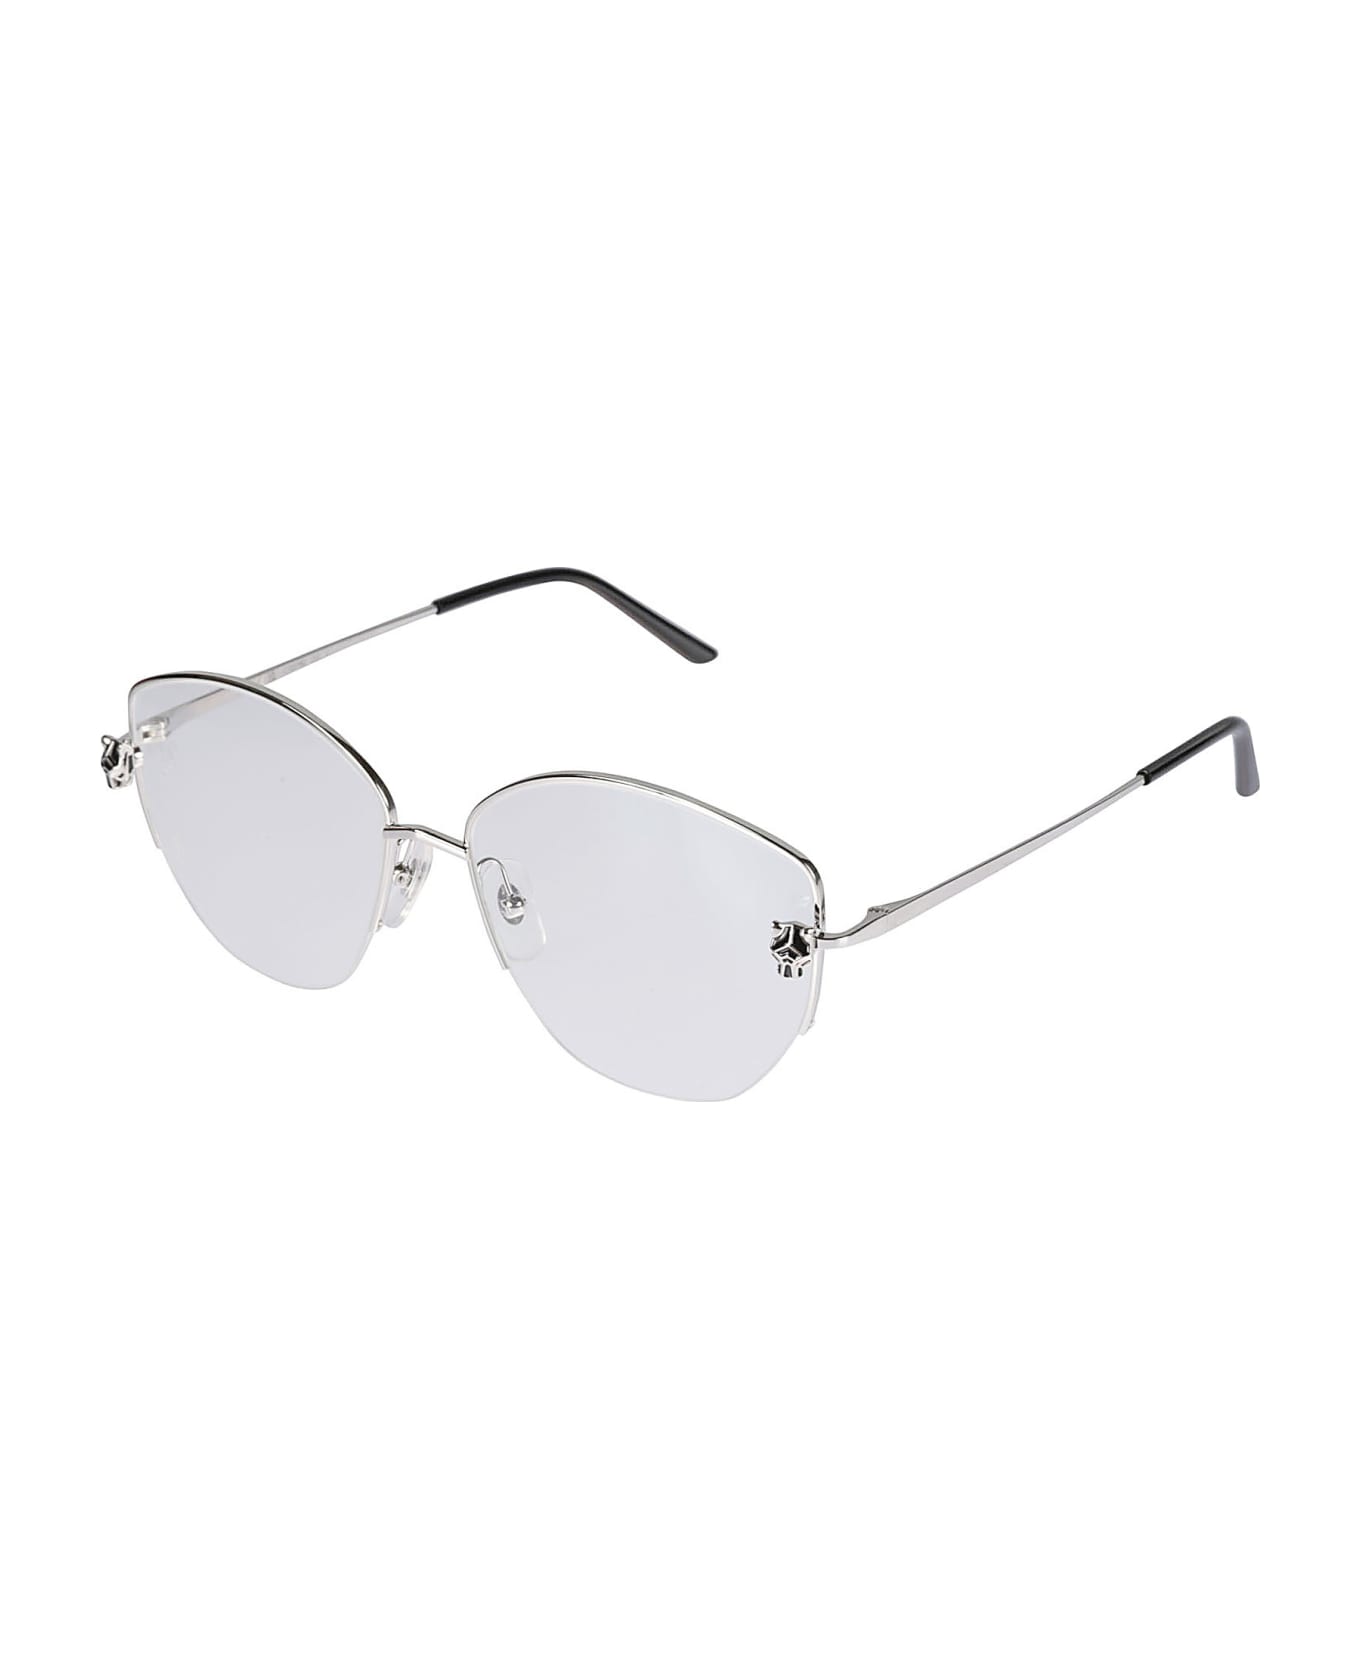 Cartier Eyewear Optical Glasses - 002 silver silver transpa アイウェア